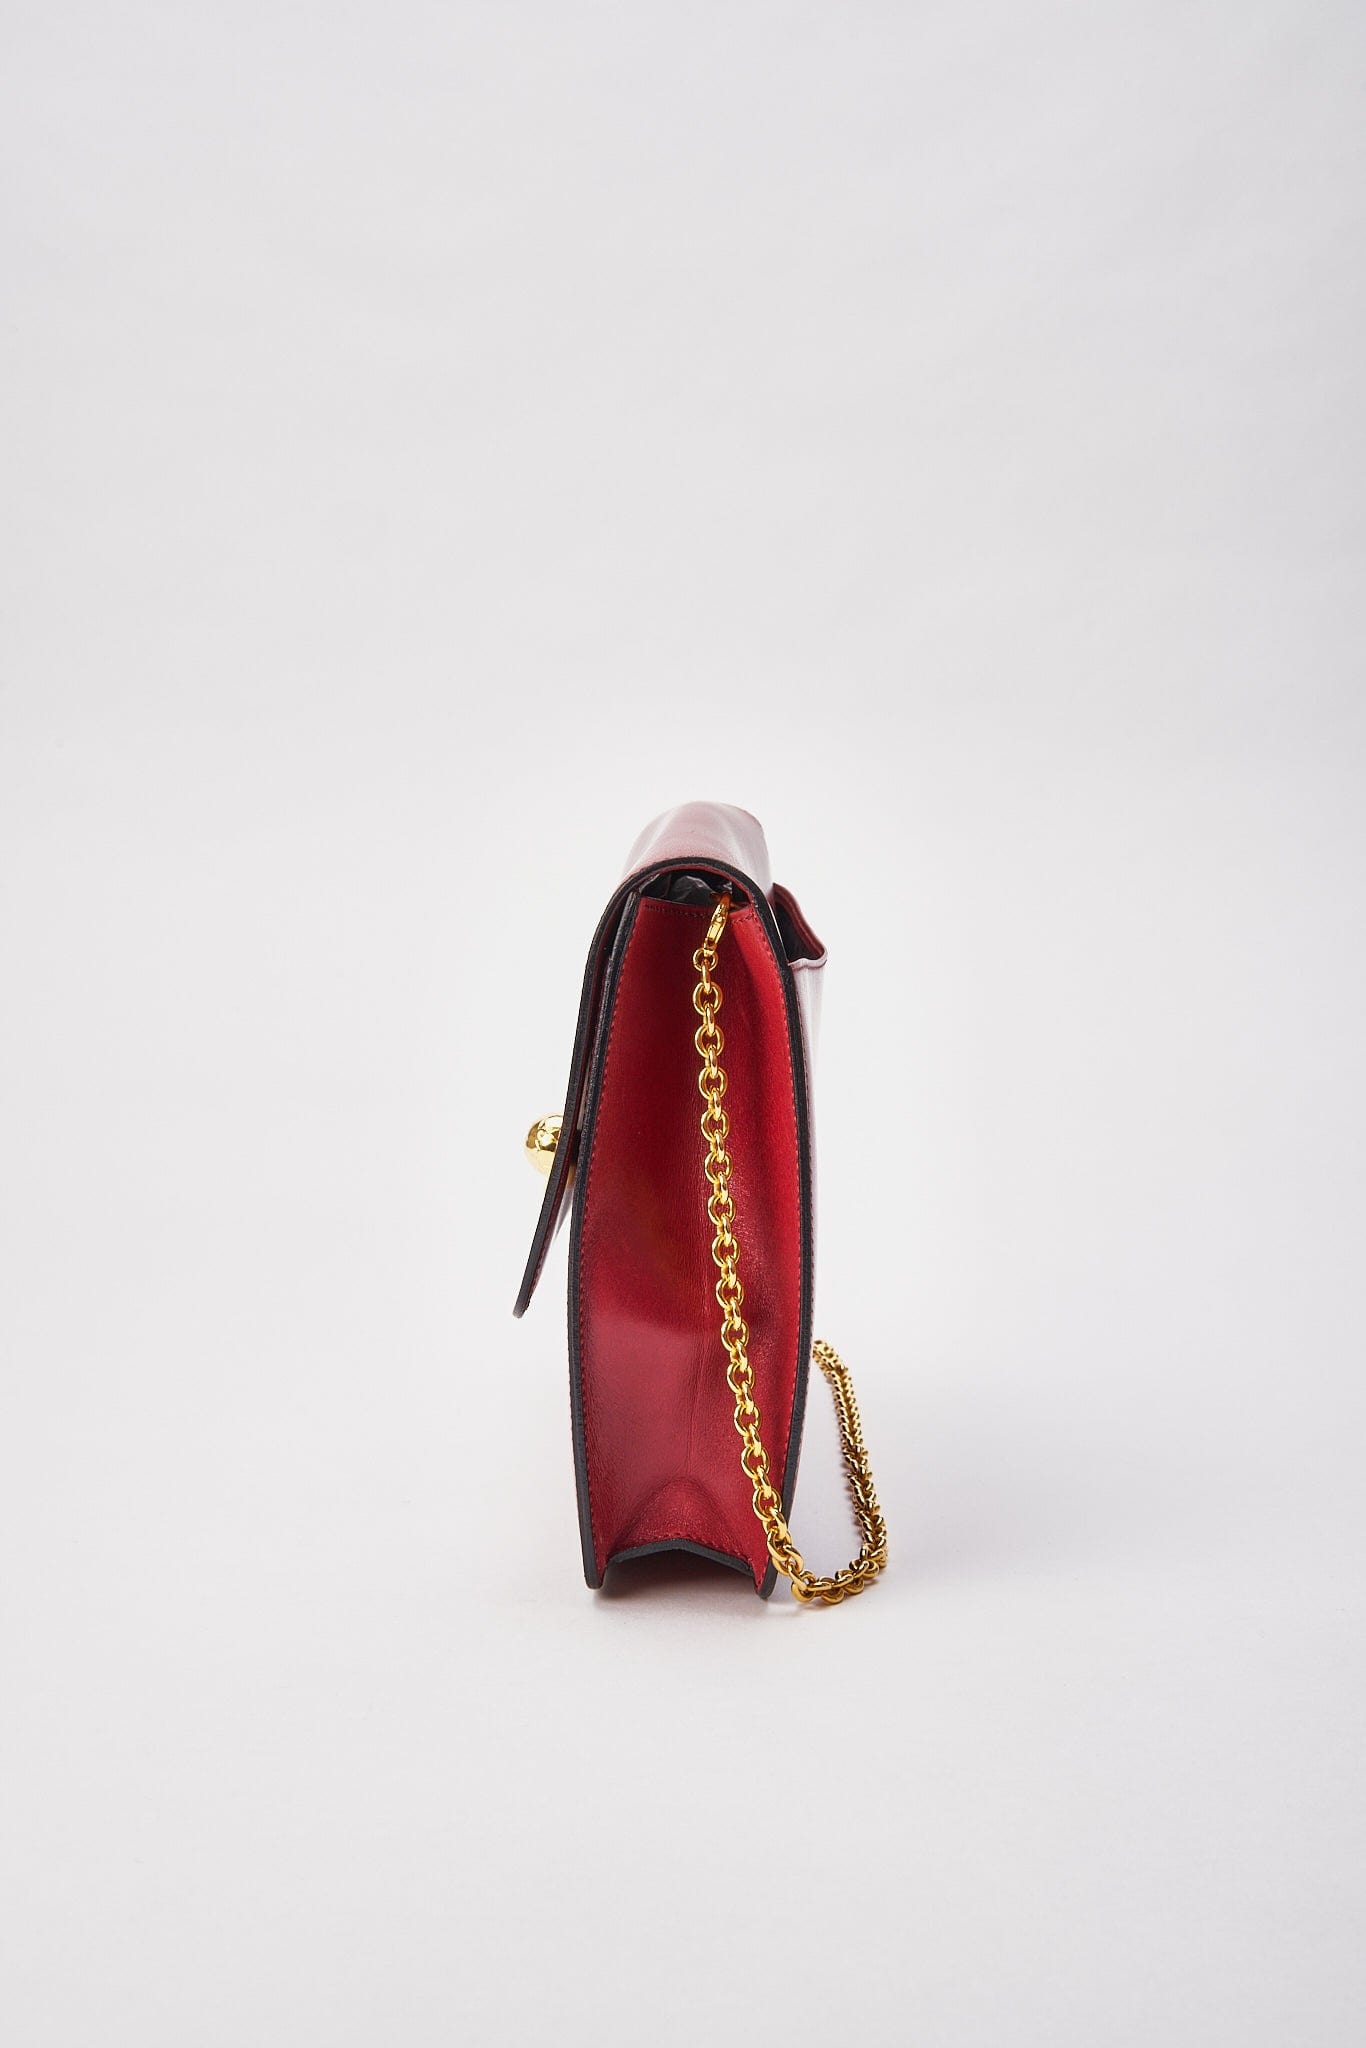 Vintage Celine Bag With Chain - Burgundy Leather